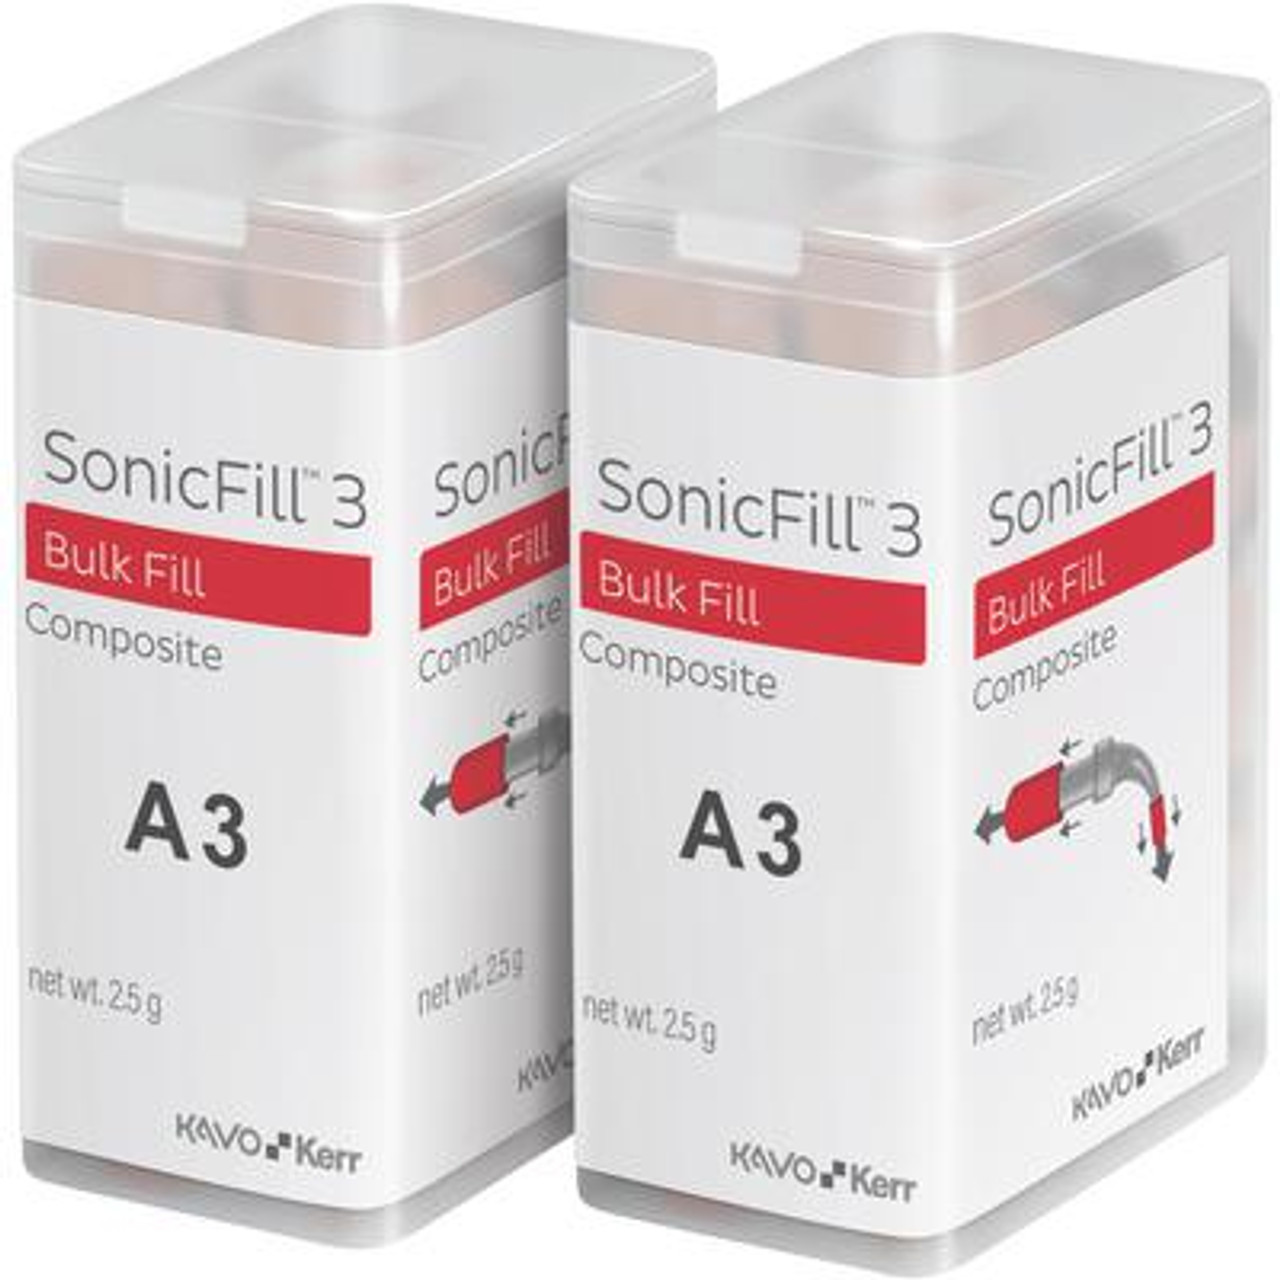 Kerr SonicFill 3 SonicFill 3 A3 Refill, 5 Gm (20 x 0.25 Unidose tips)